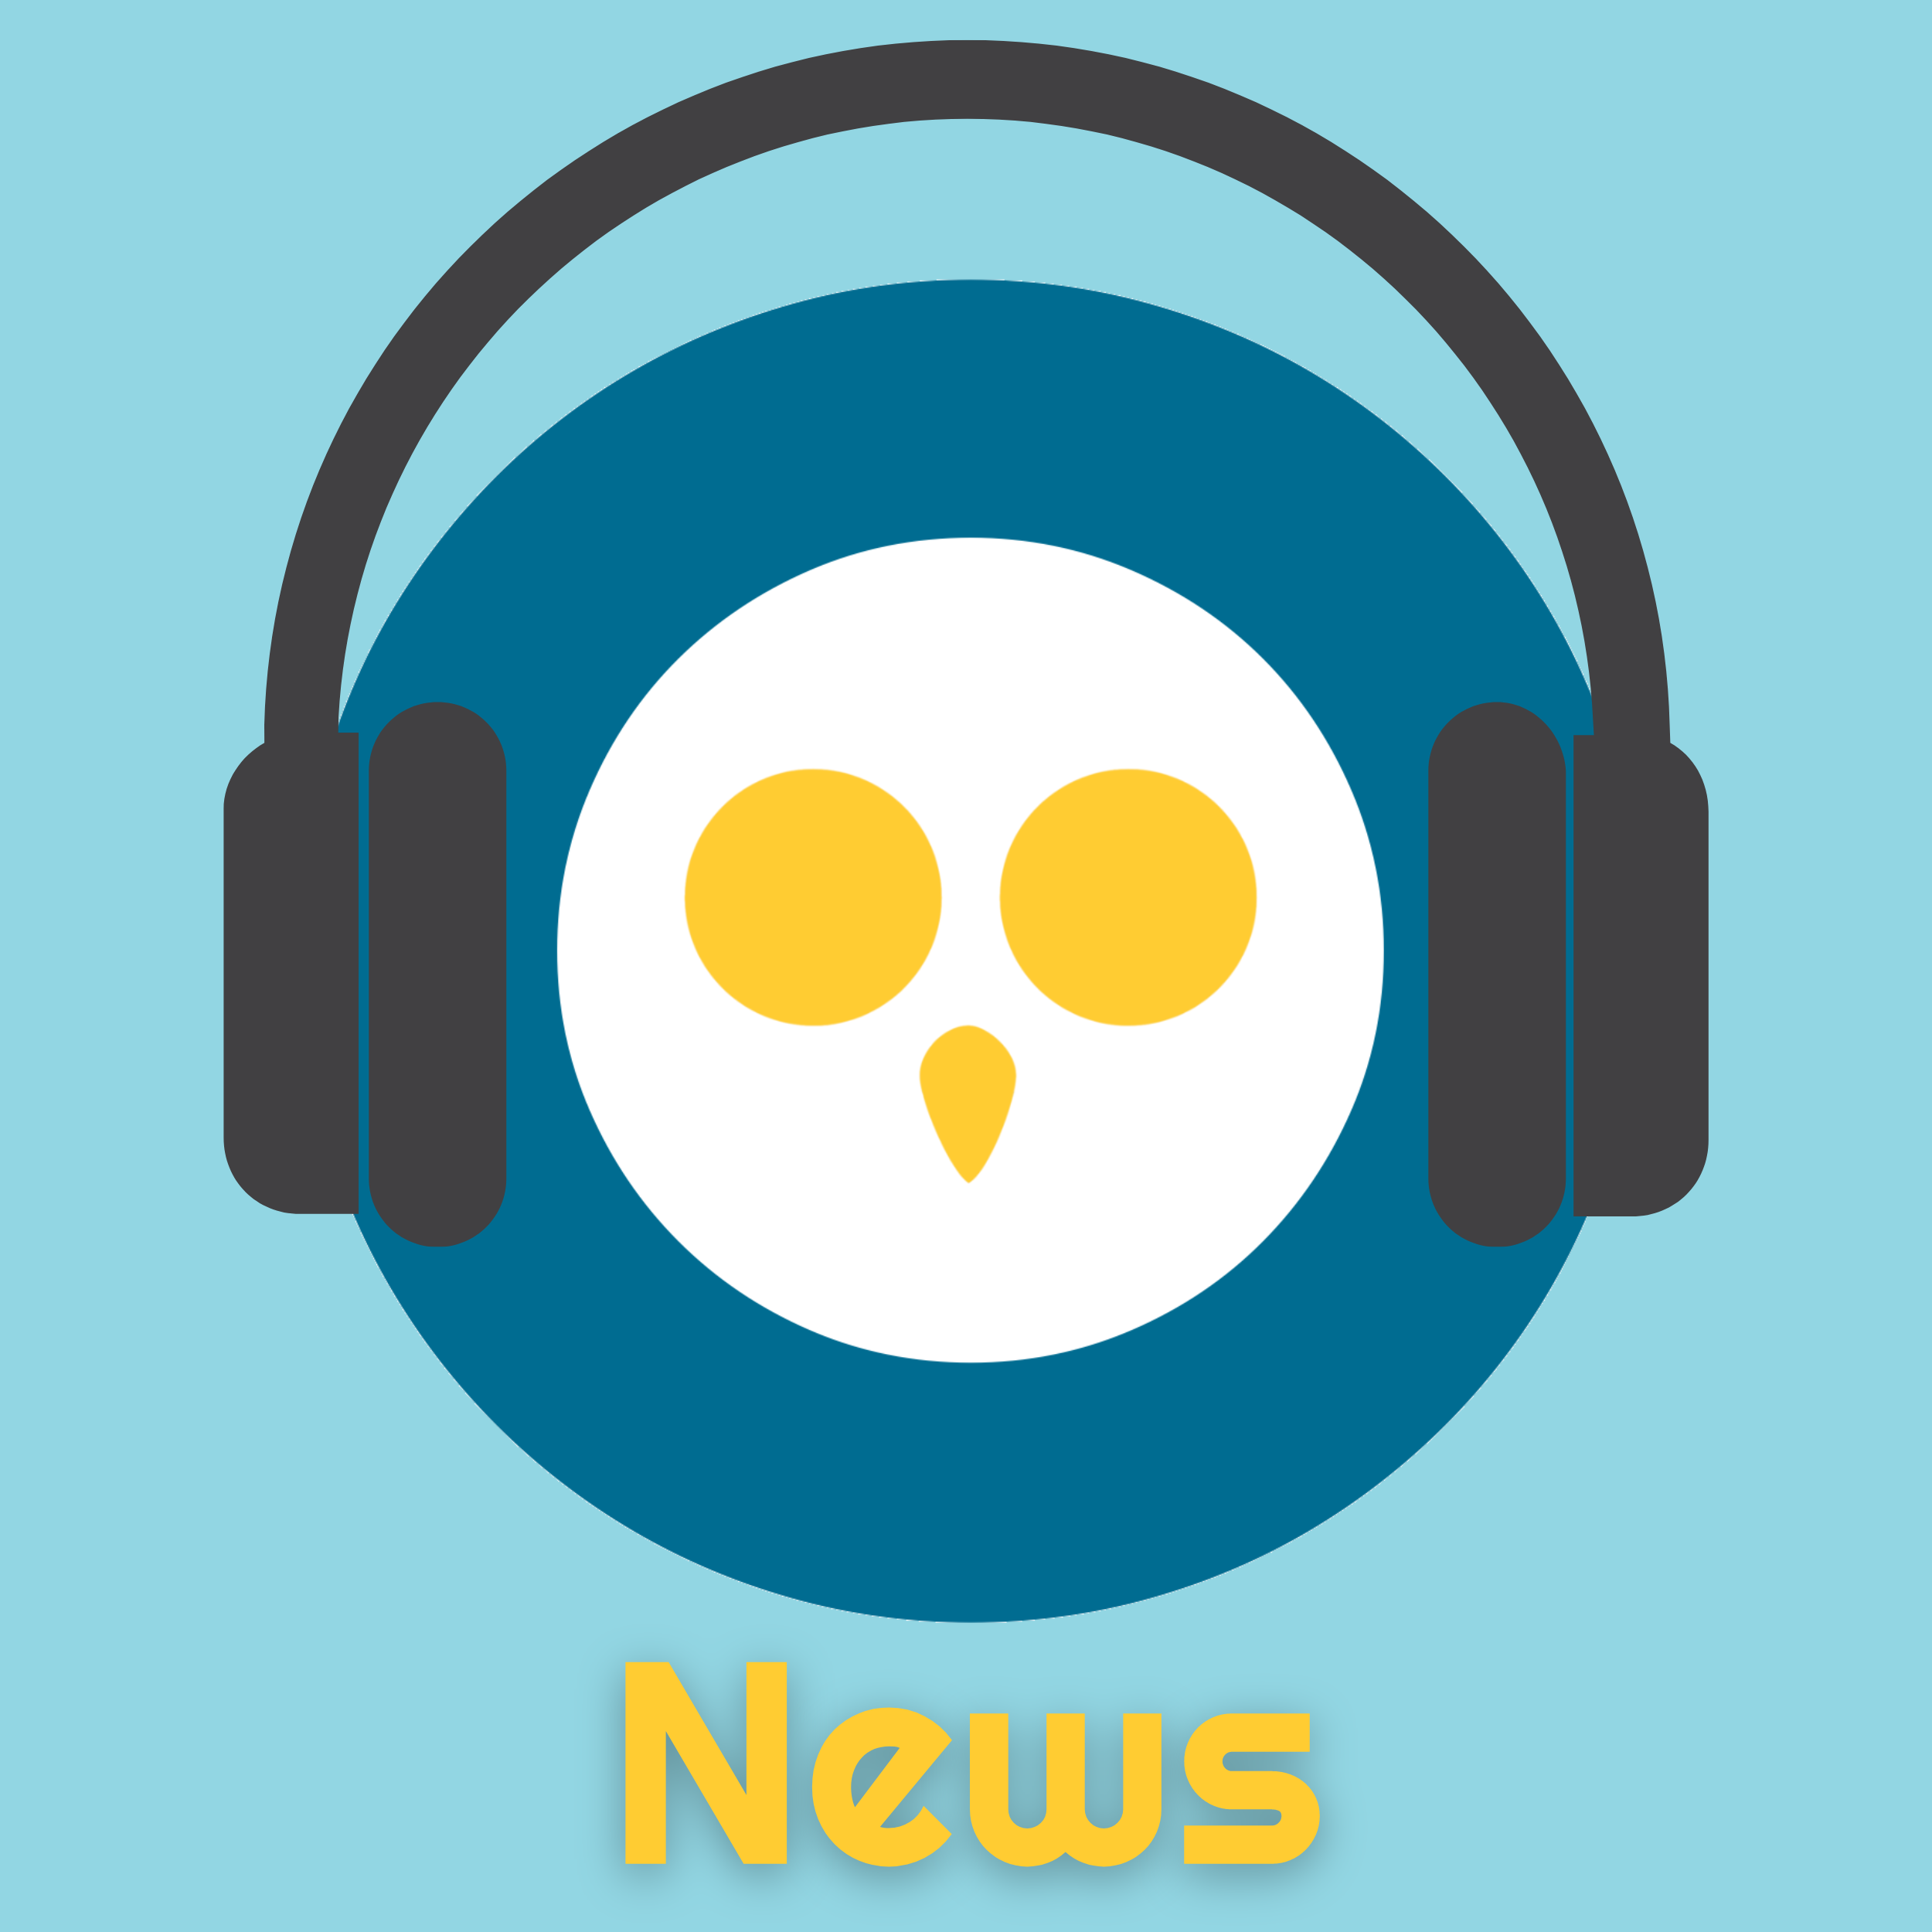 The Owl News logo